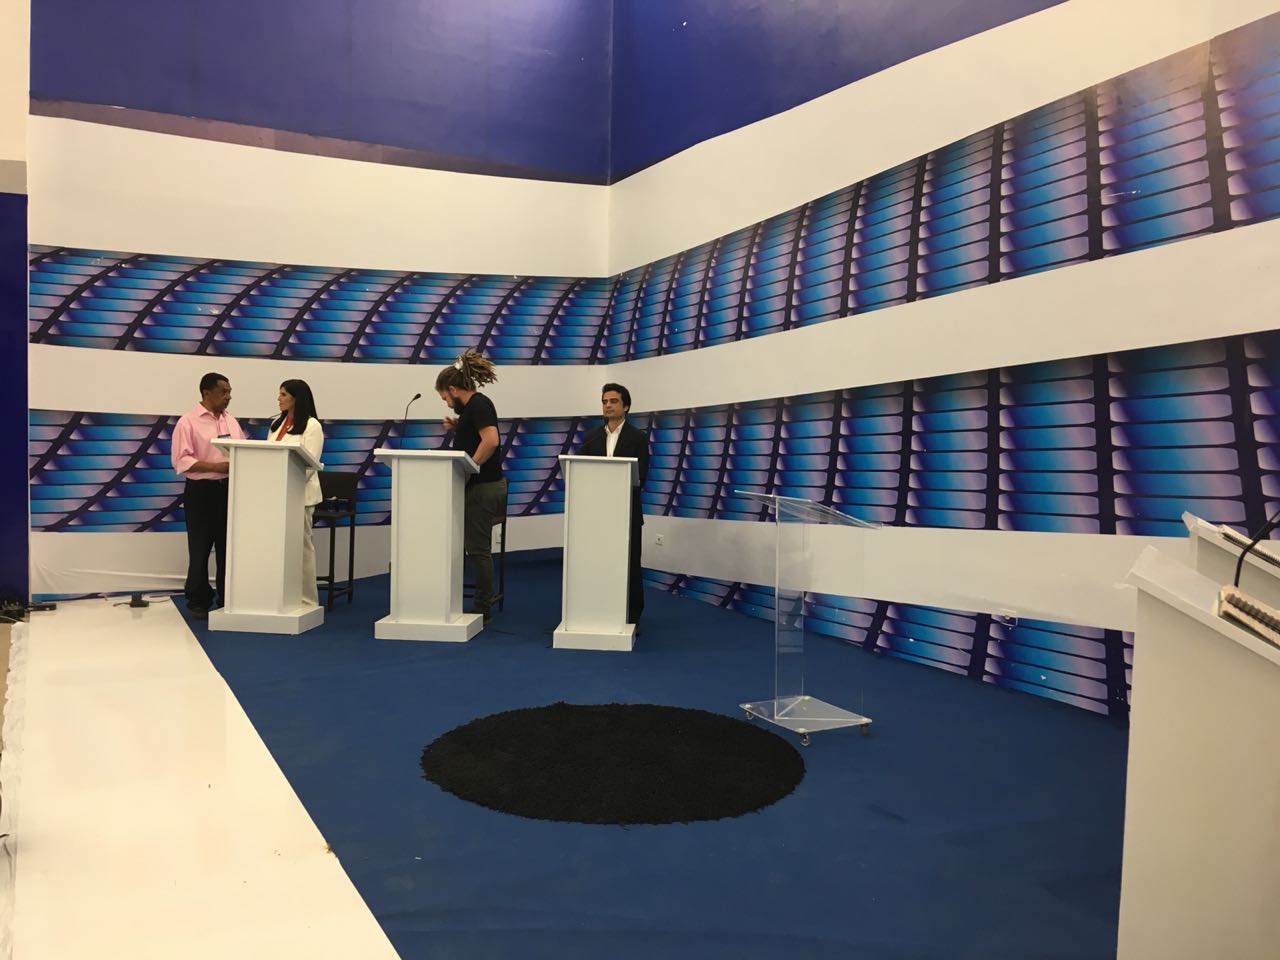 WhatsApp Image 2018 08 27 at 21.18.43 - DEBATE TV MASTER: saiba tudo que aconteceu na discussão entre os candidatos a vice-governador da Paraíba